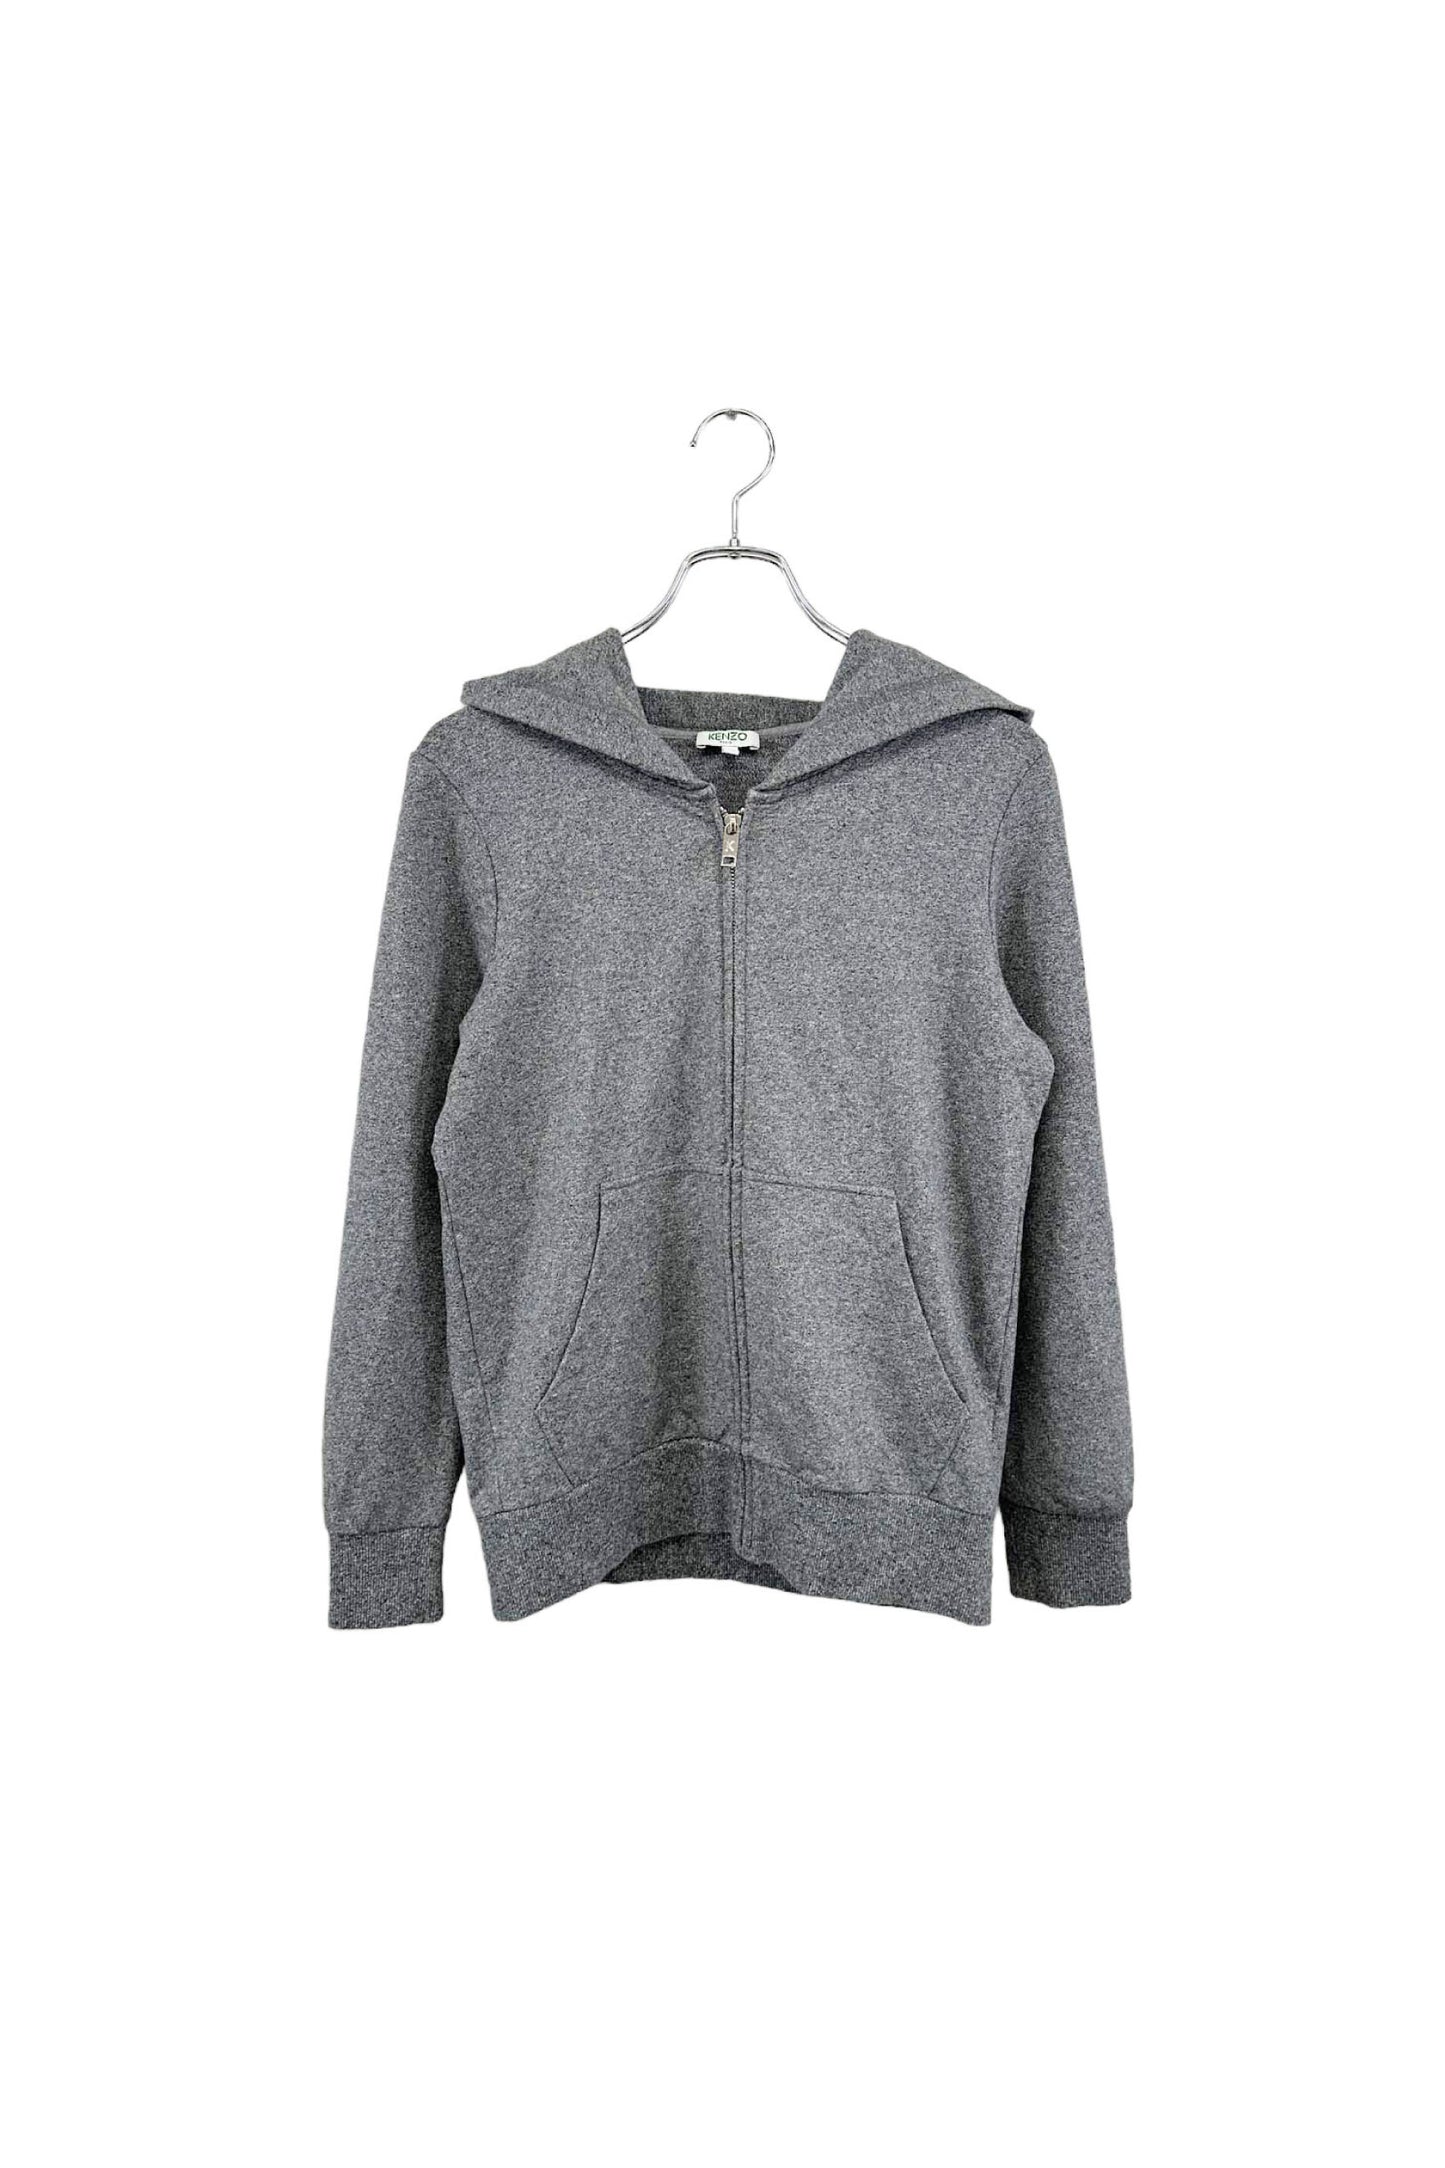 KENZO PARIS gray hoodie